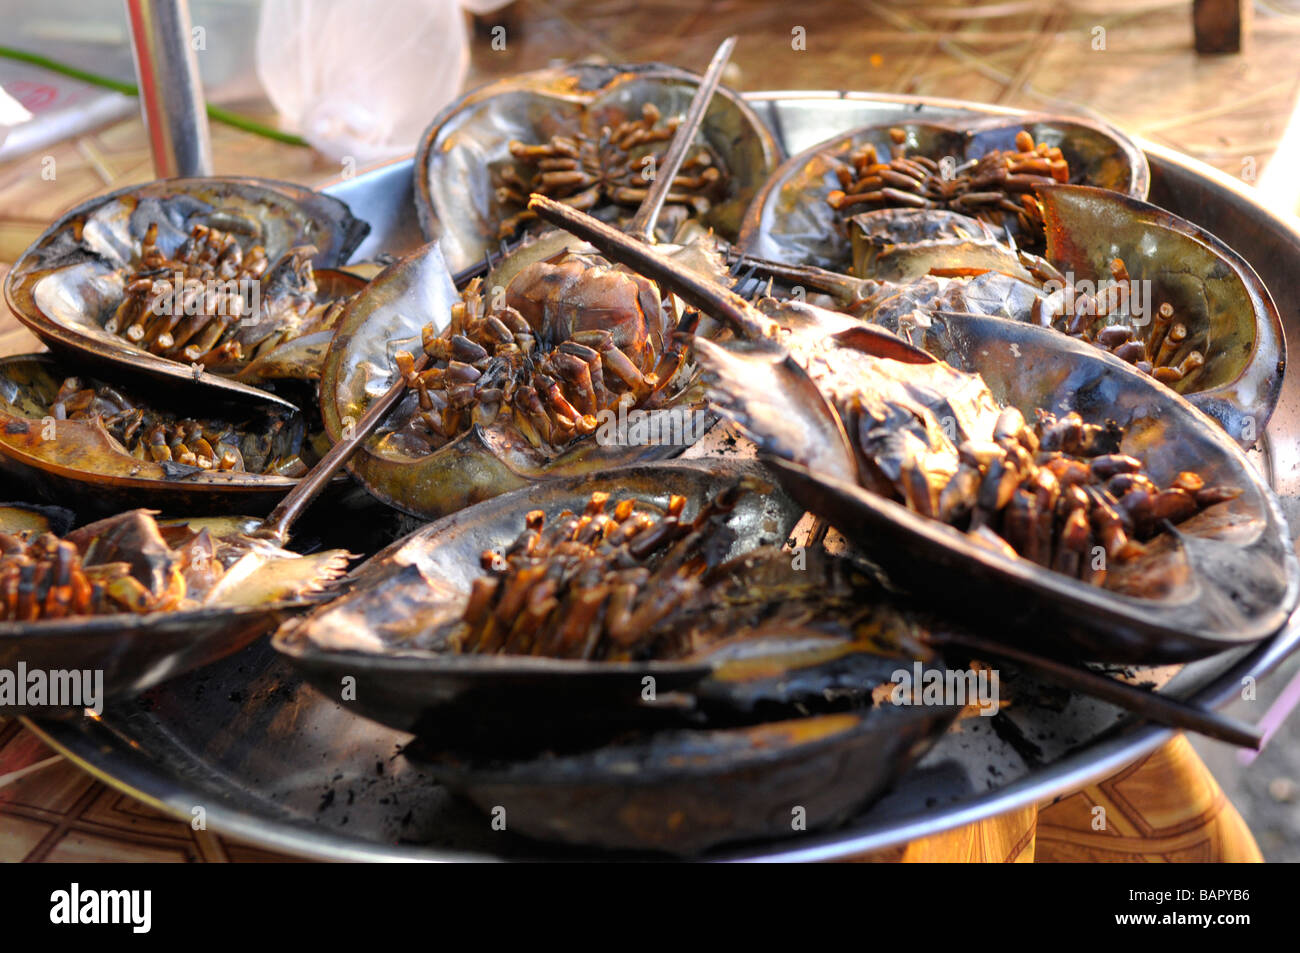 bbq king crab. Stock Photo